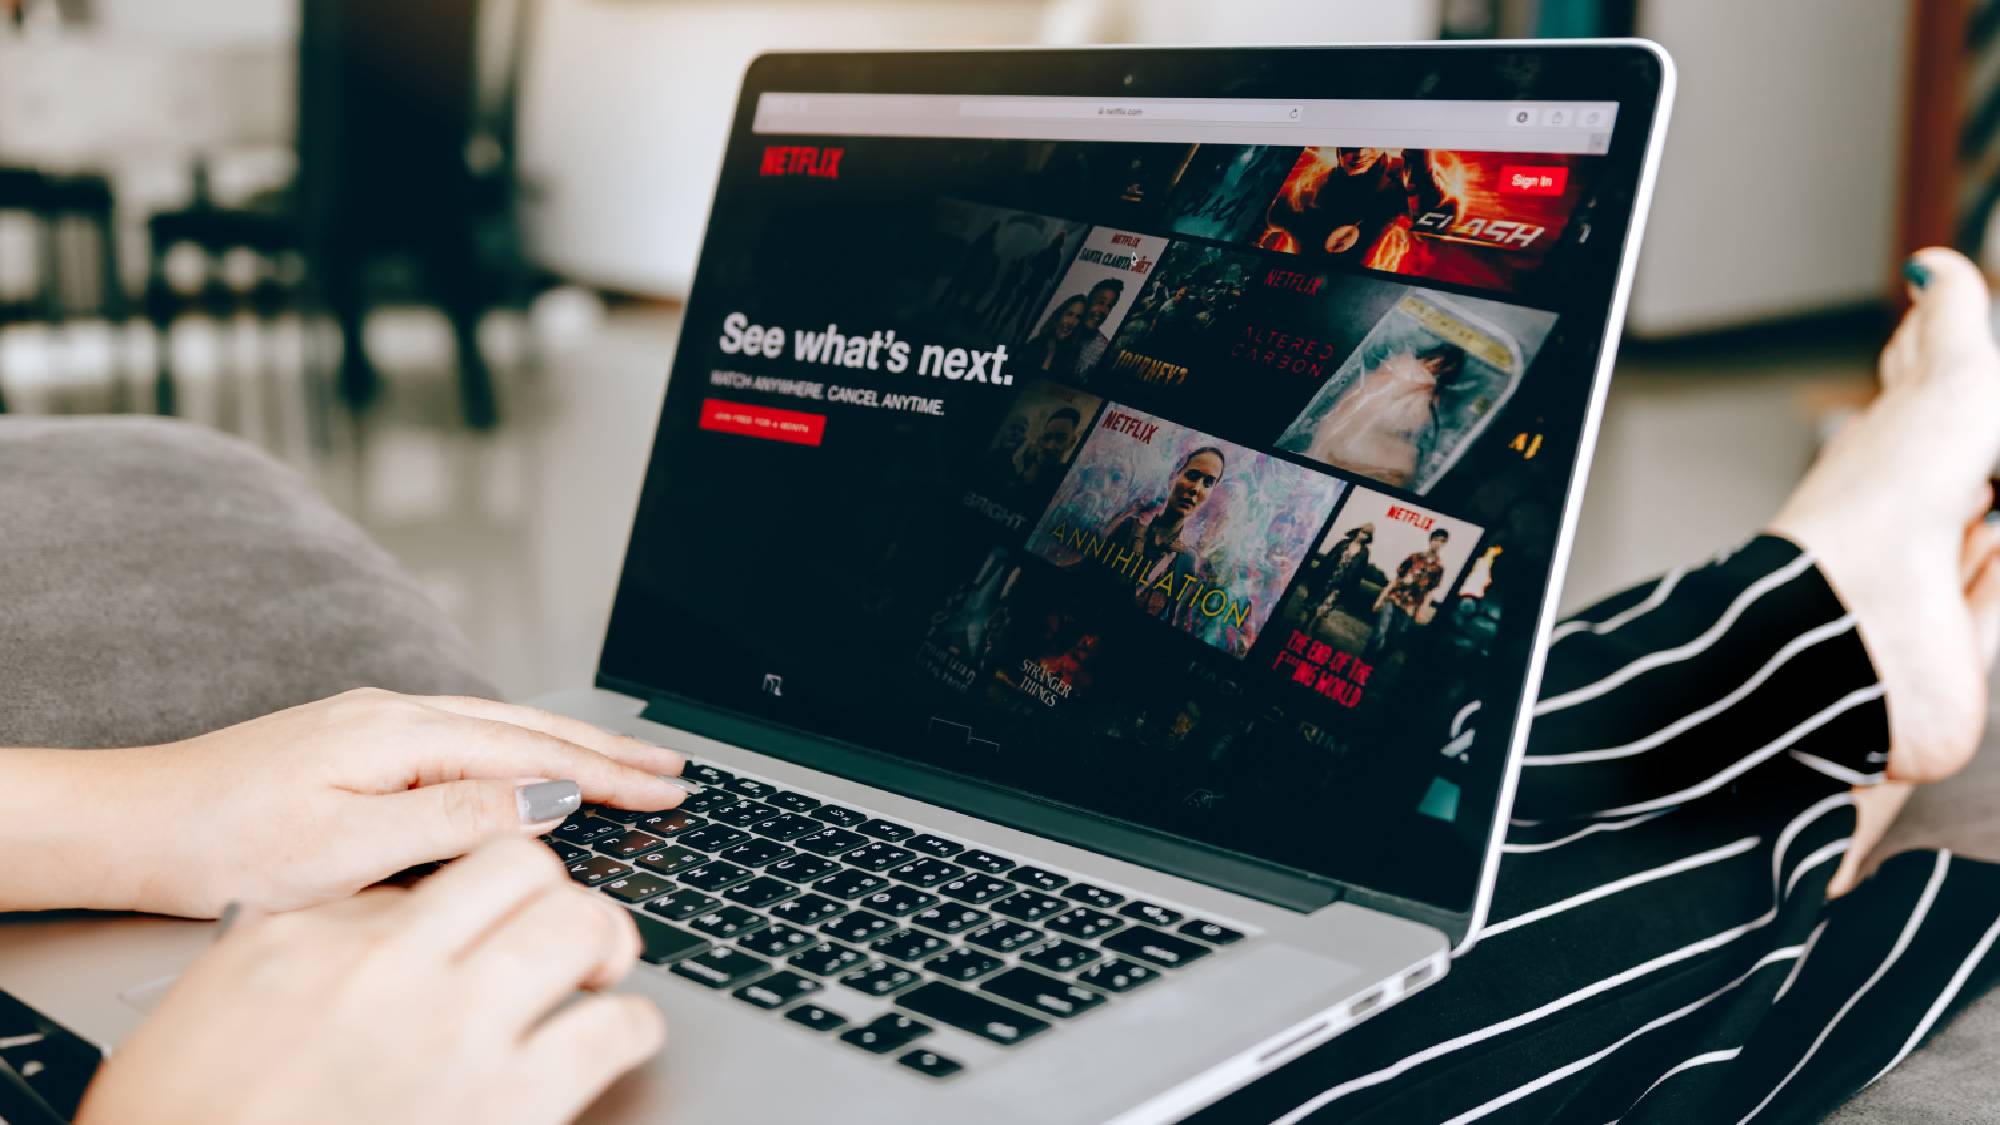 Netflix on a laptop screen